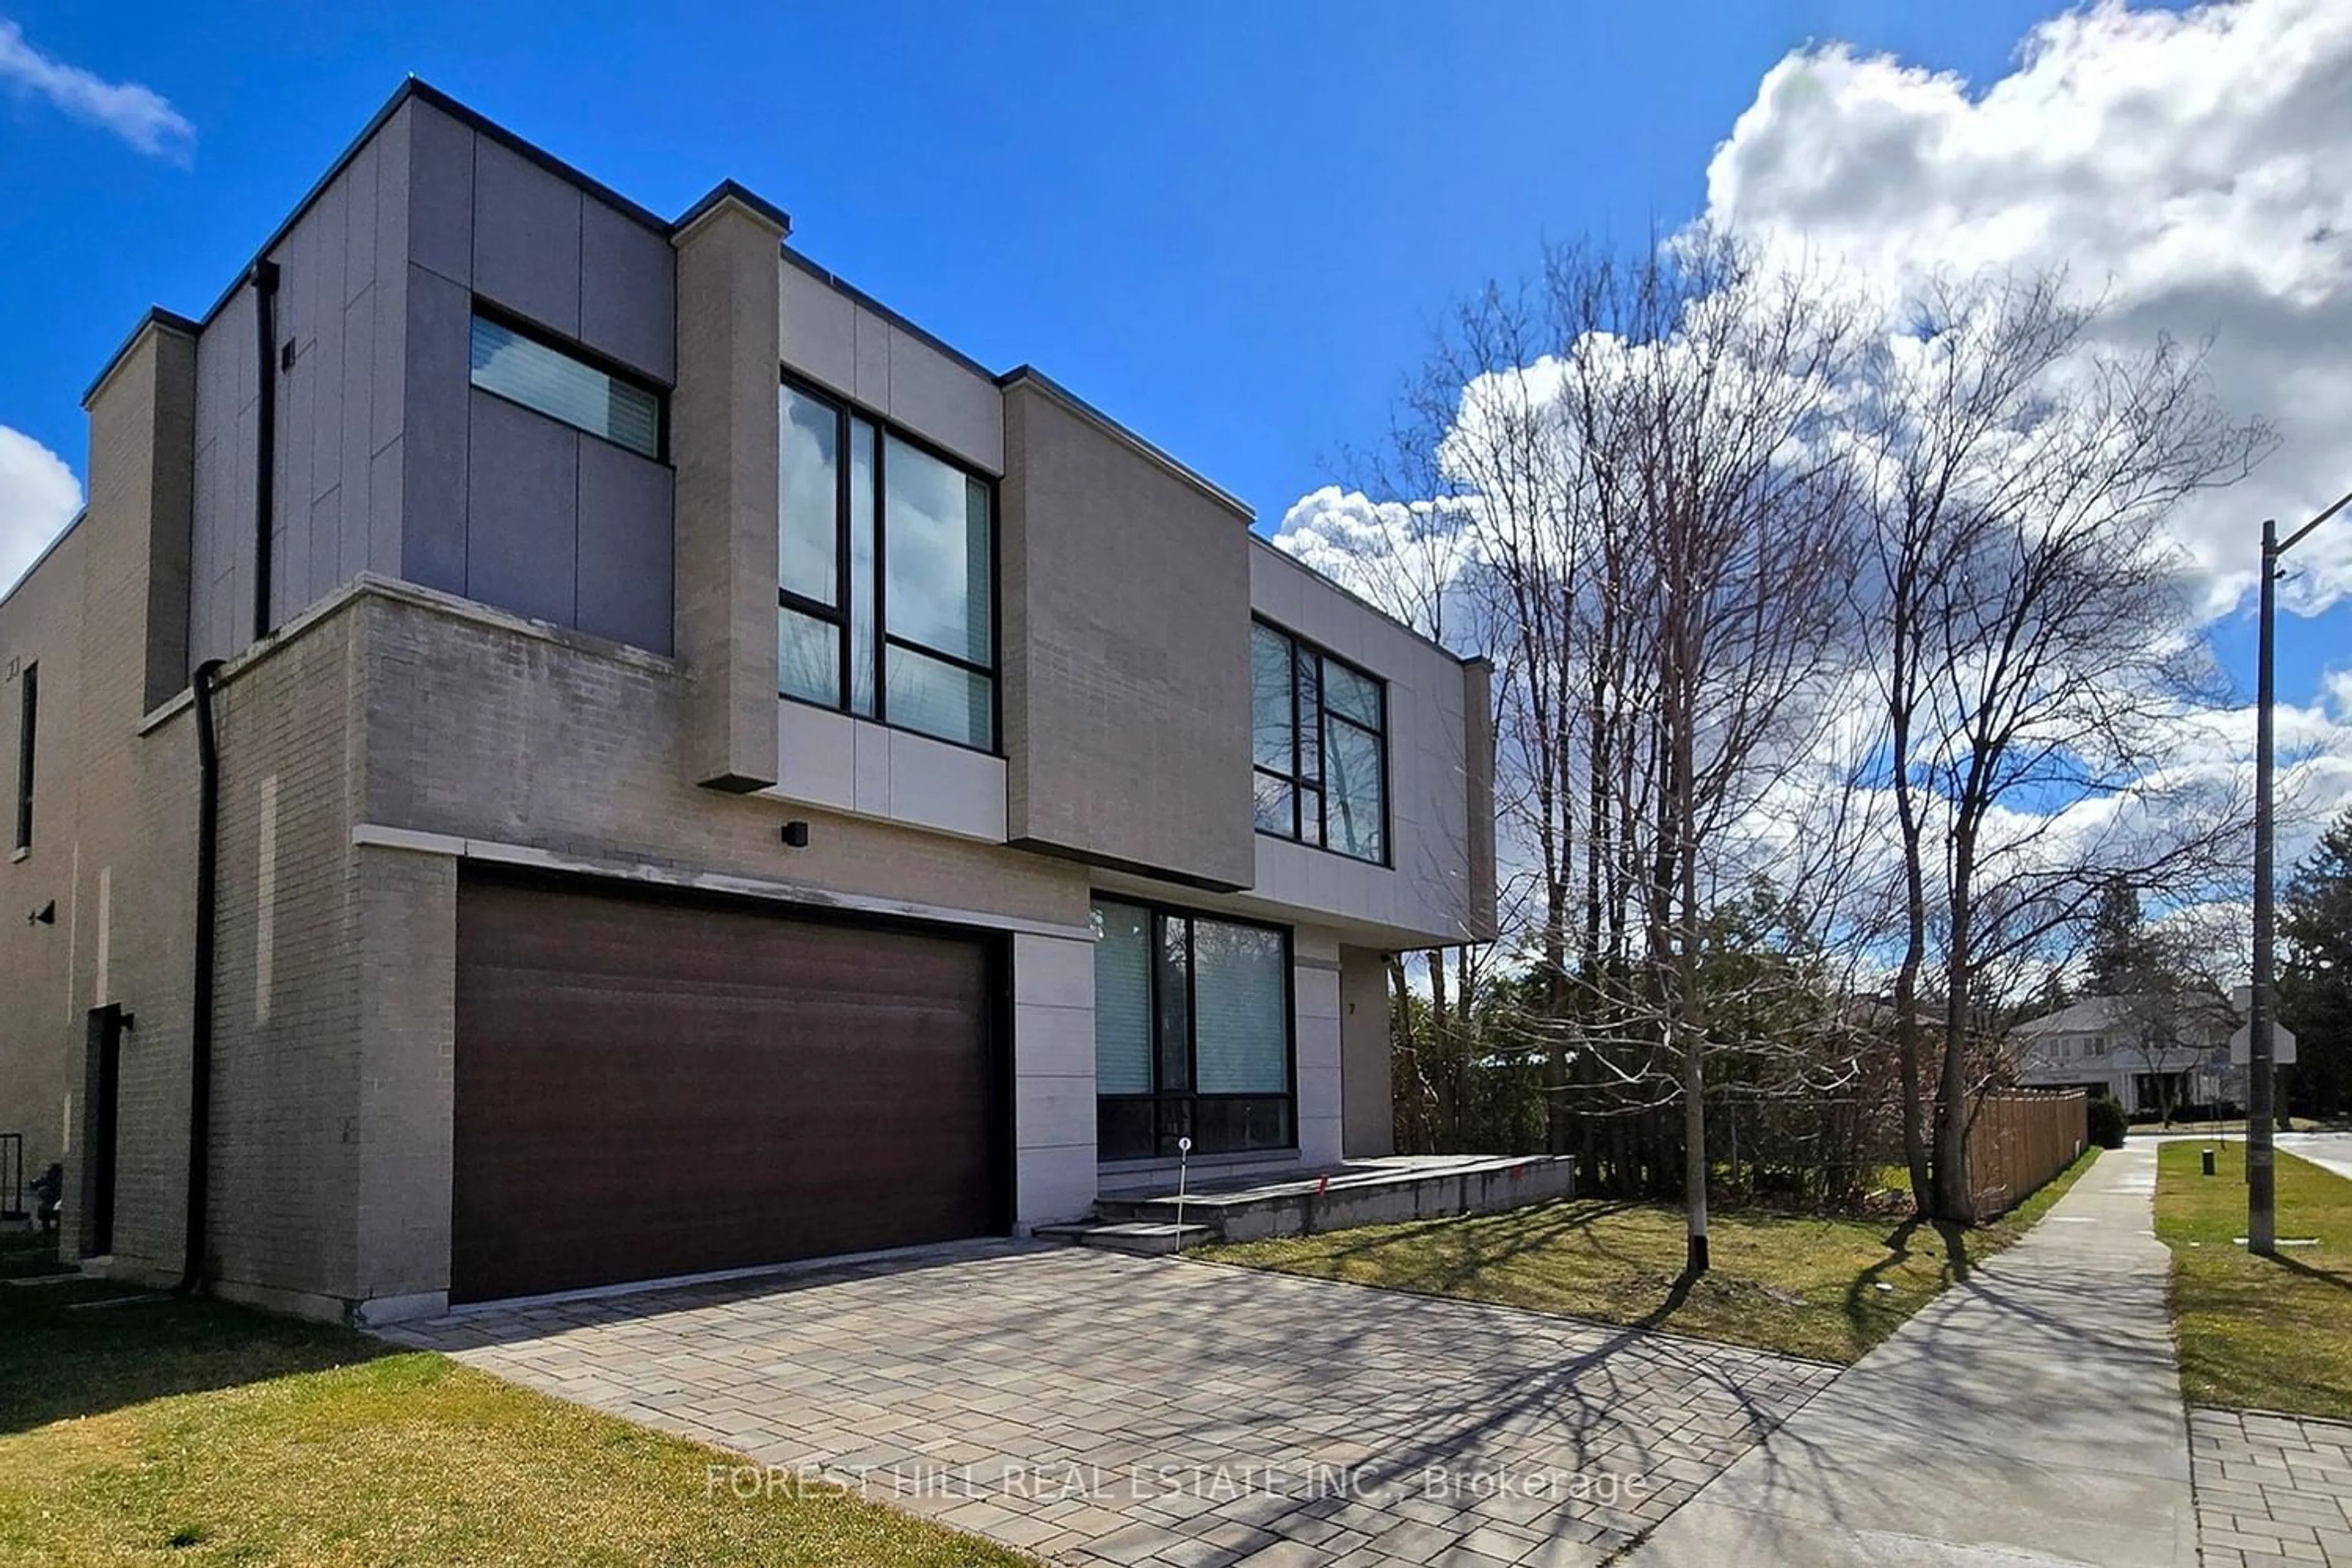 Home with brick exterior material for 7 Fairmeadow Ave, Toronto Ontario M2P 0A5